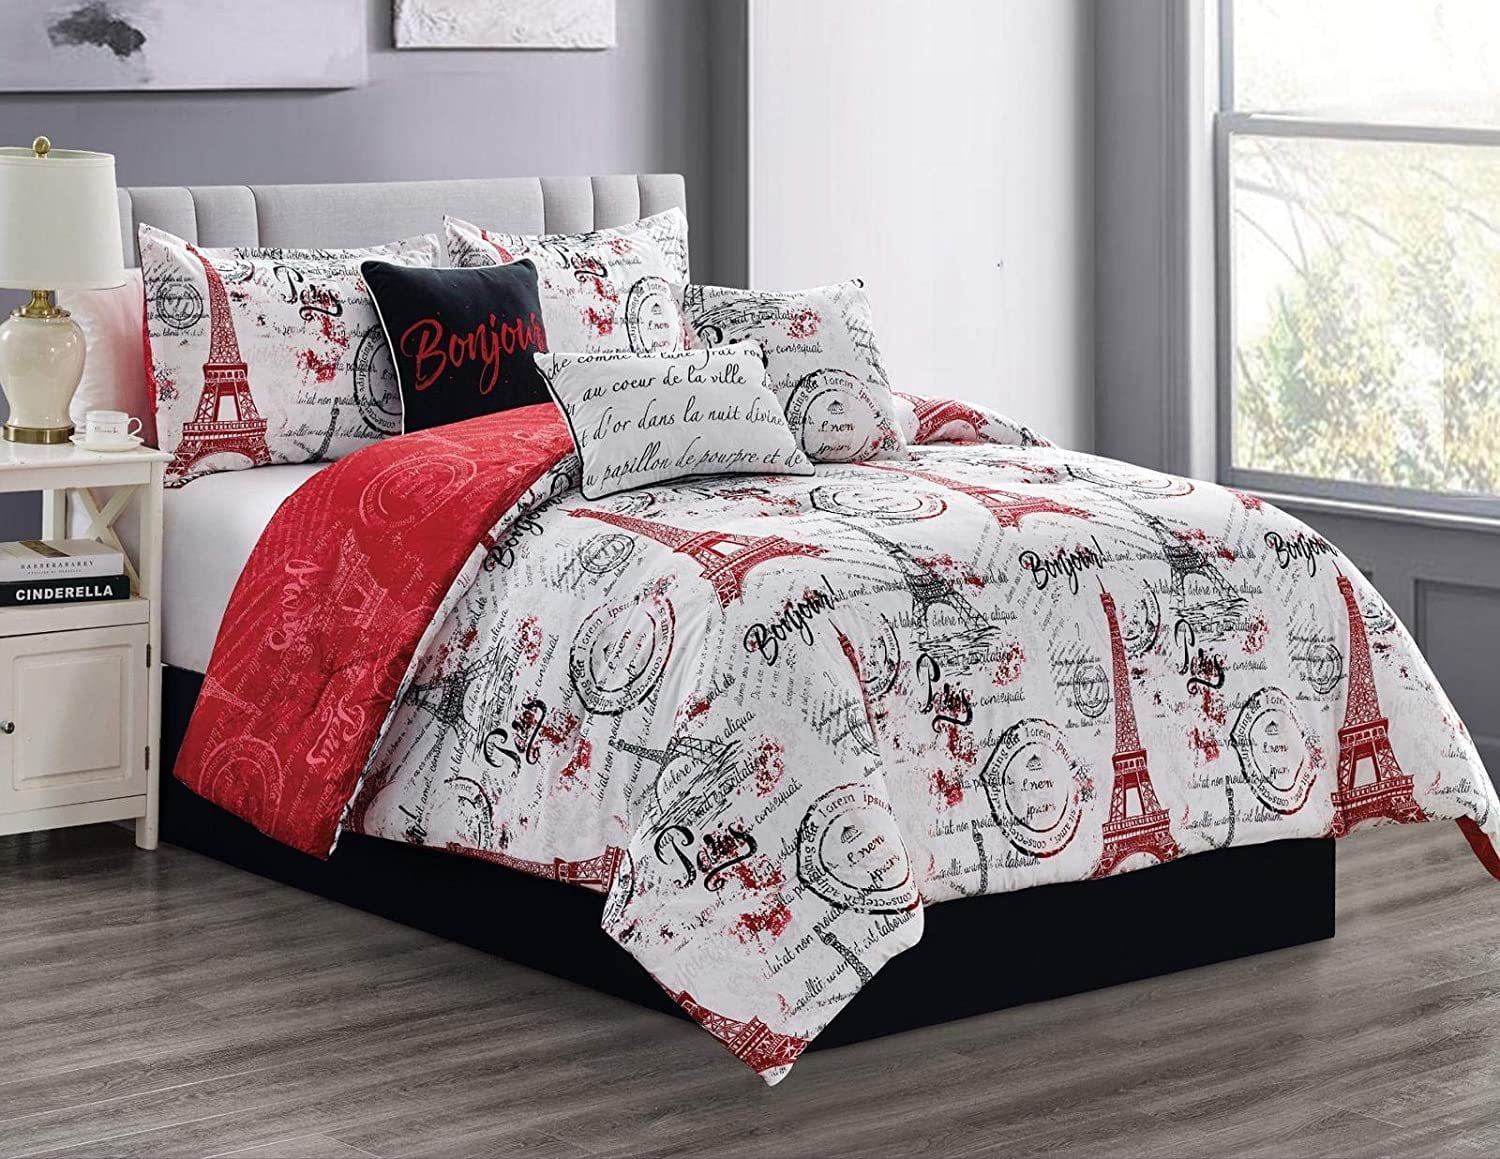 King Comforter Sets At Walmart Flash Sales, 57% OFF | www 